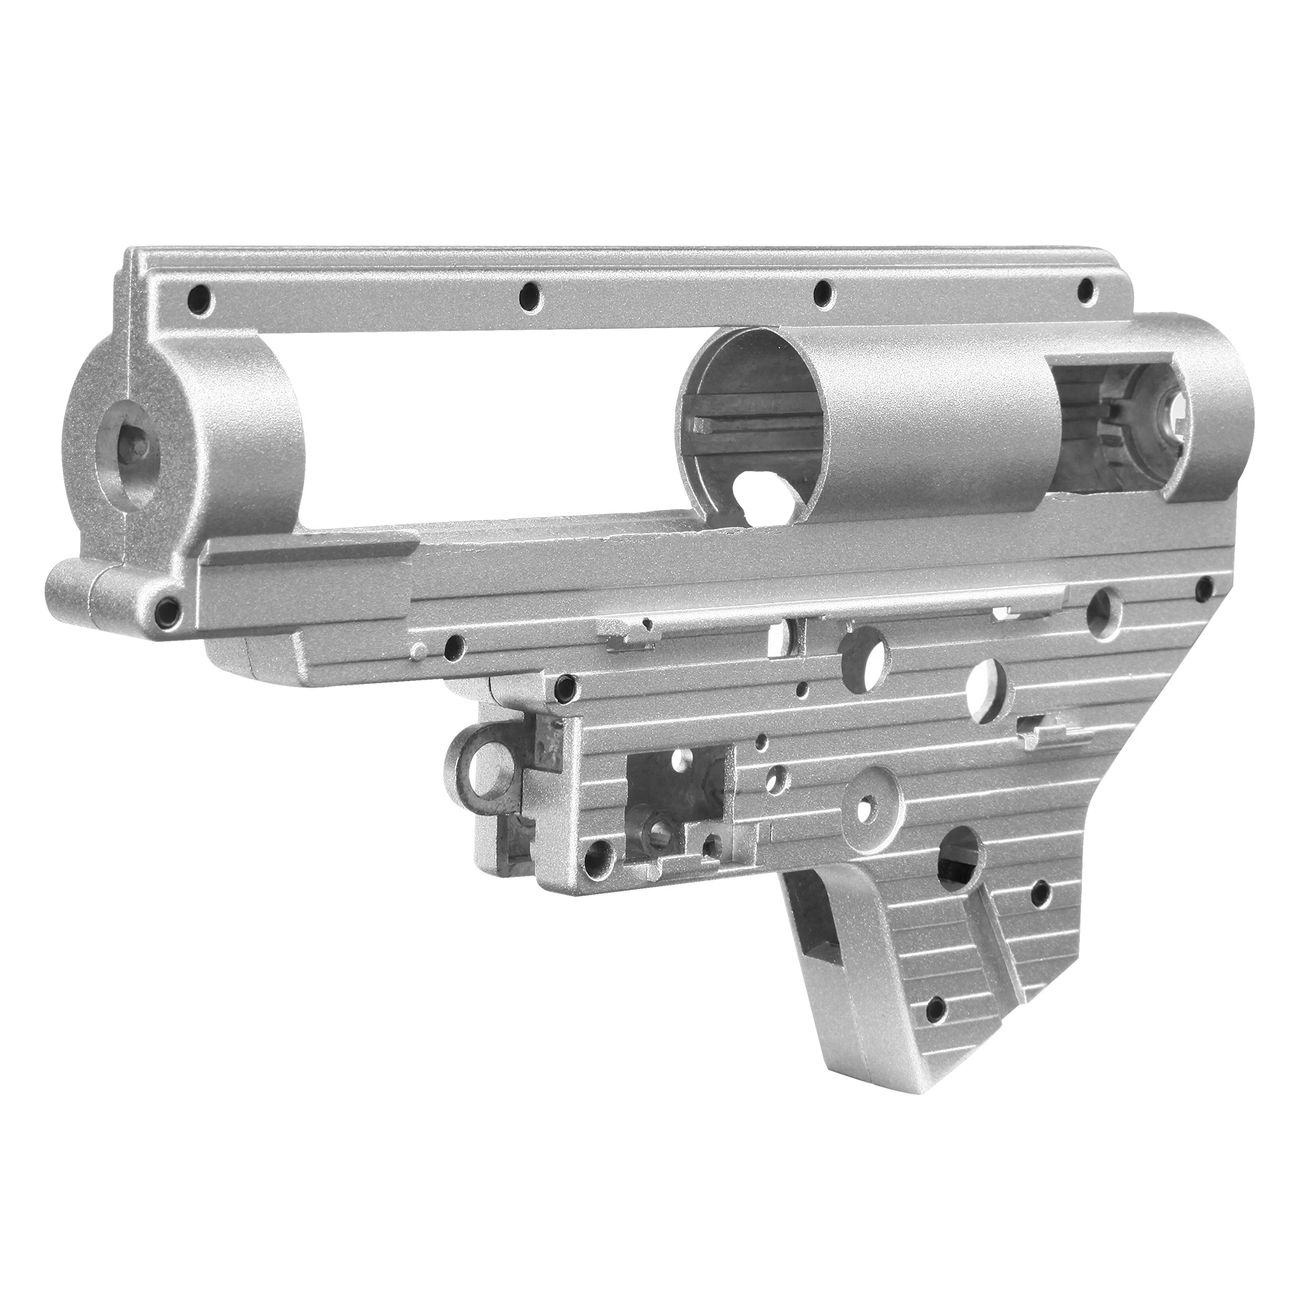 Modify 8mm Torus Aluminium Gearboxgehuse Version 2 inkl. Zubehr silber Bild 1